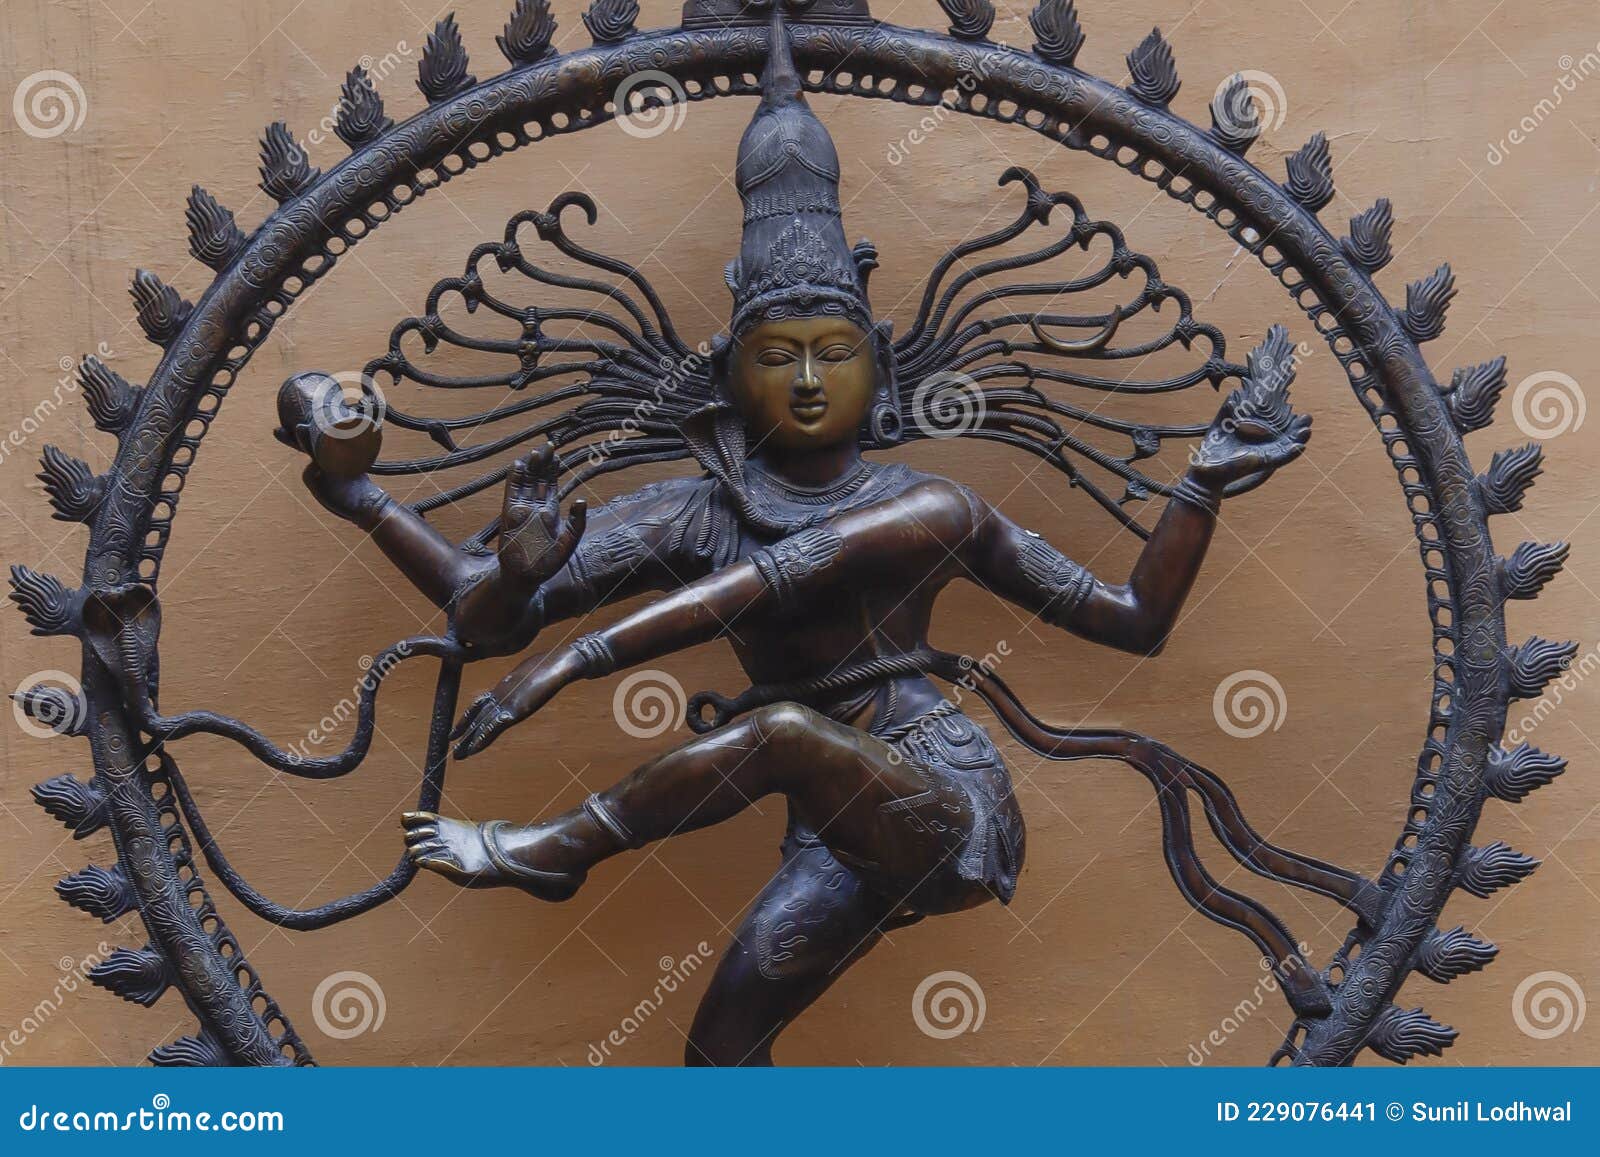 Natraj, the Fierce Dance Form of Lord Shiva. Nataraja Stock Image ...